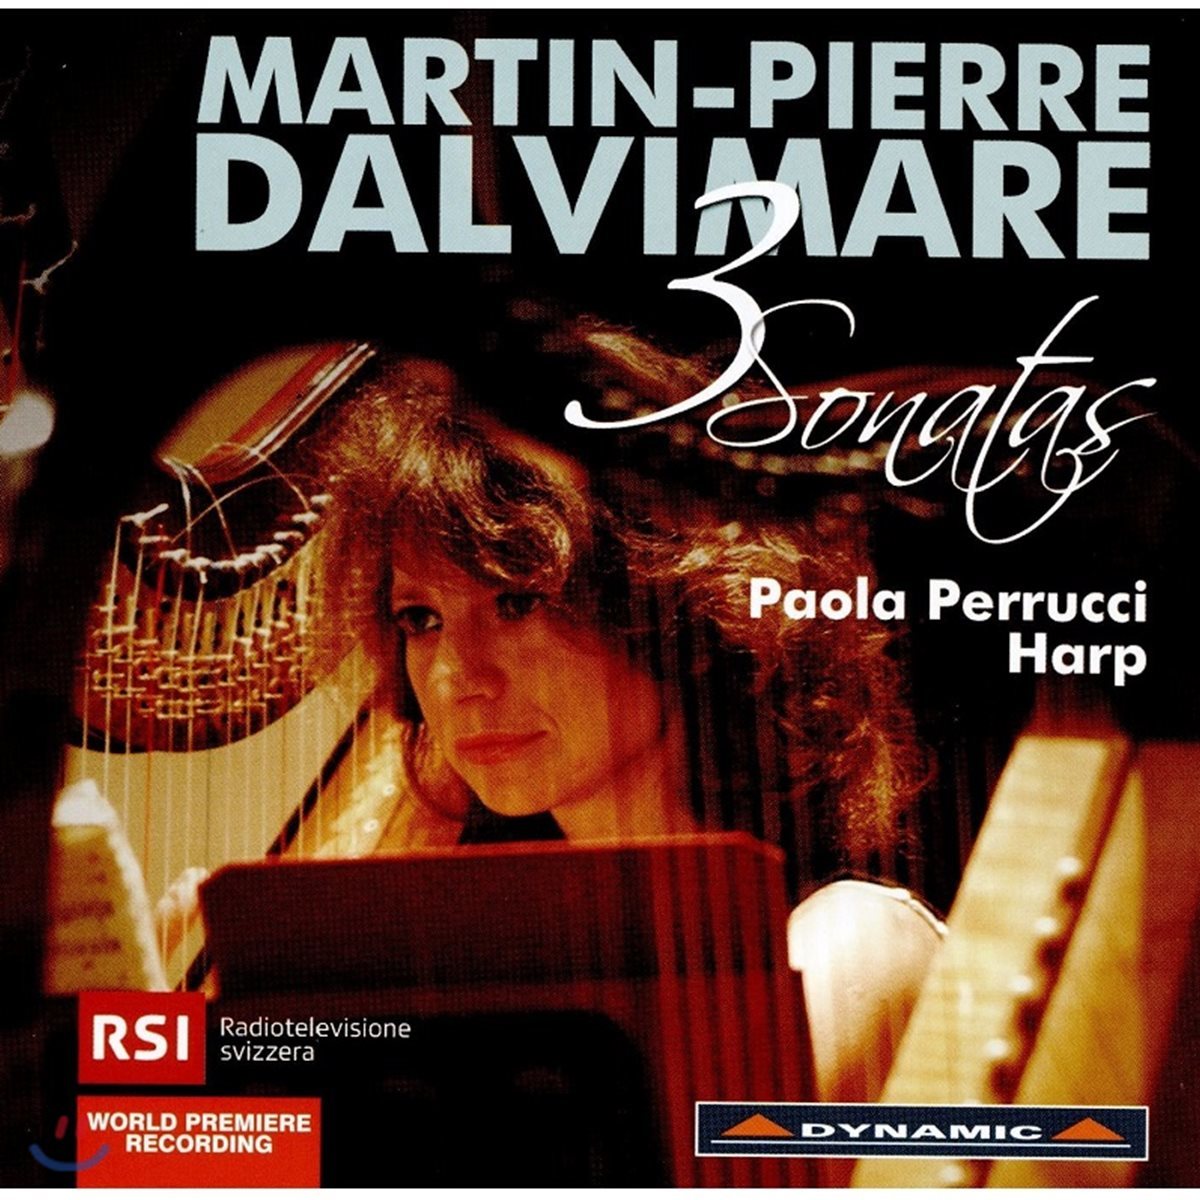 Paola Perrucci 마르탱-피에르 달비마레: 3개의 소나타 (Martin-Pierre Dalvimare: 3 Sonatas for Harp)